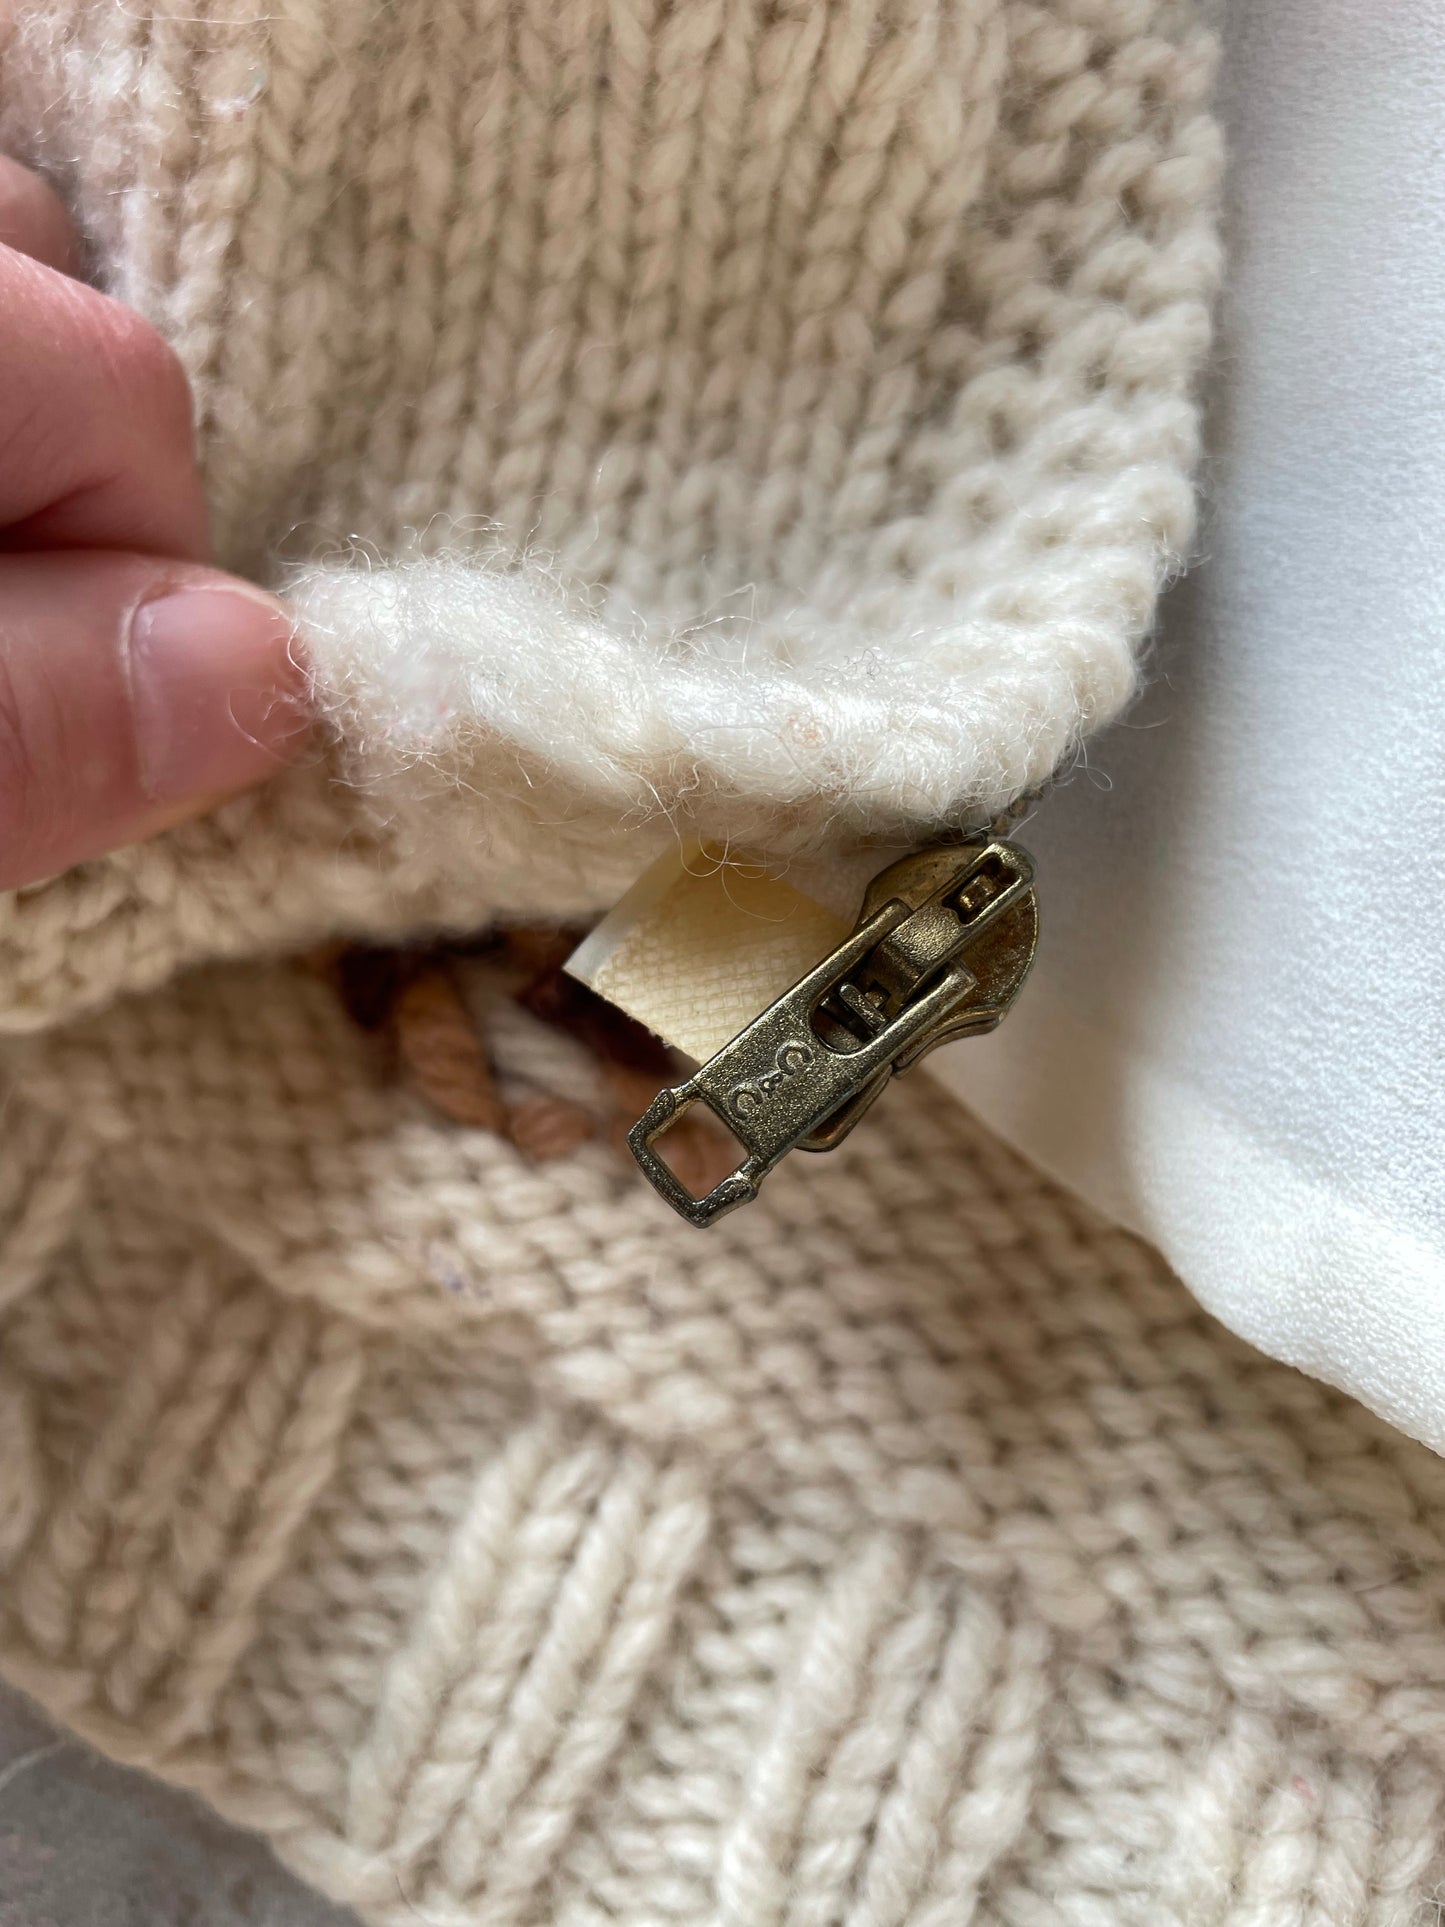 Mary Maxim Hand Knit Rodeo Horse Sweater